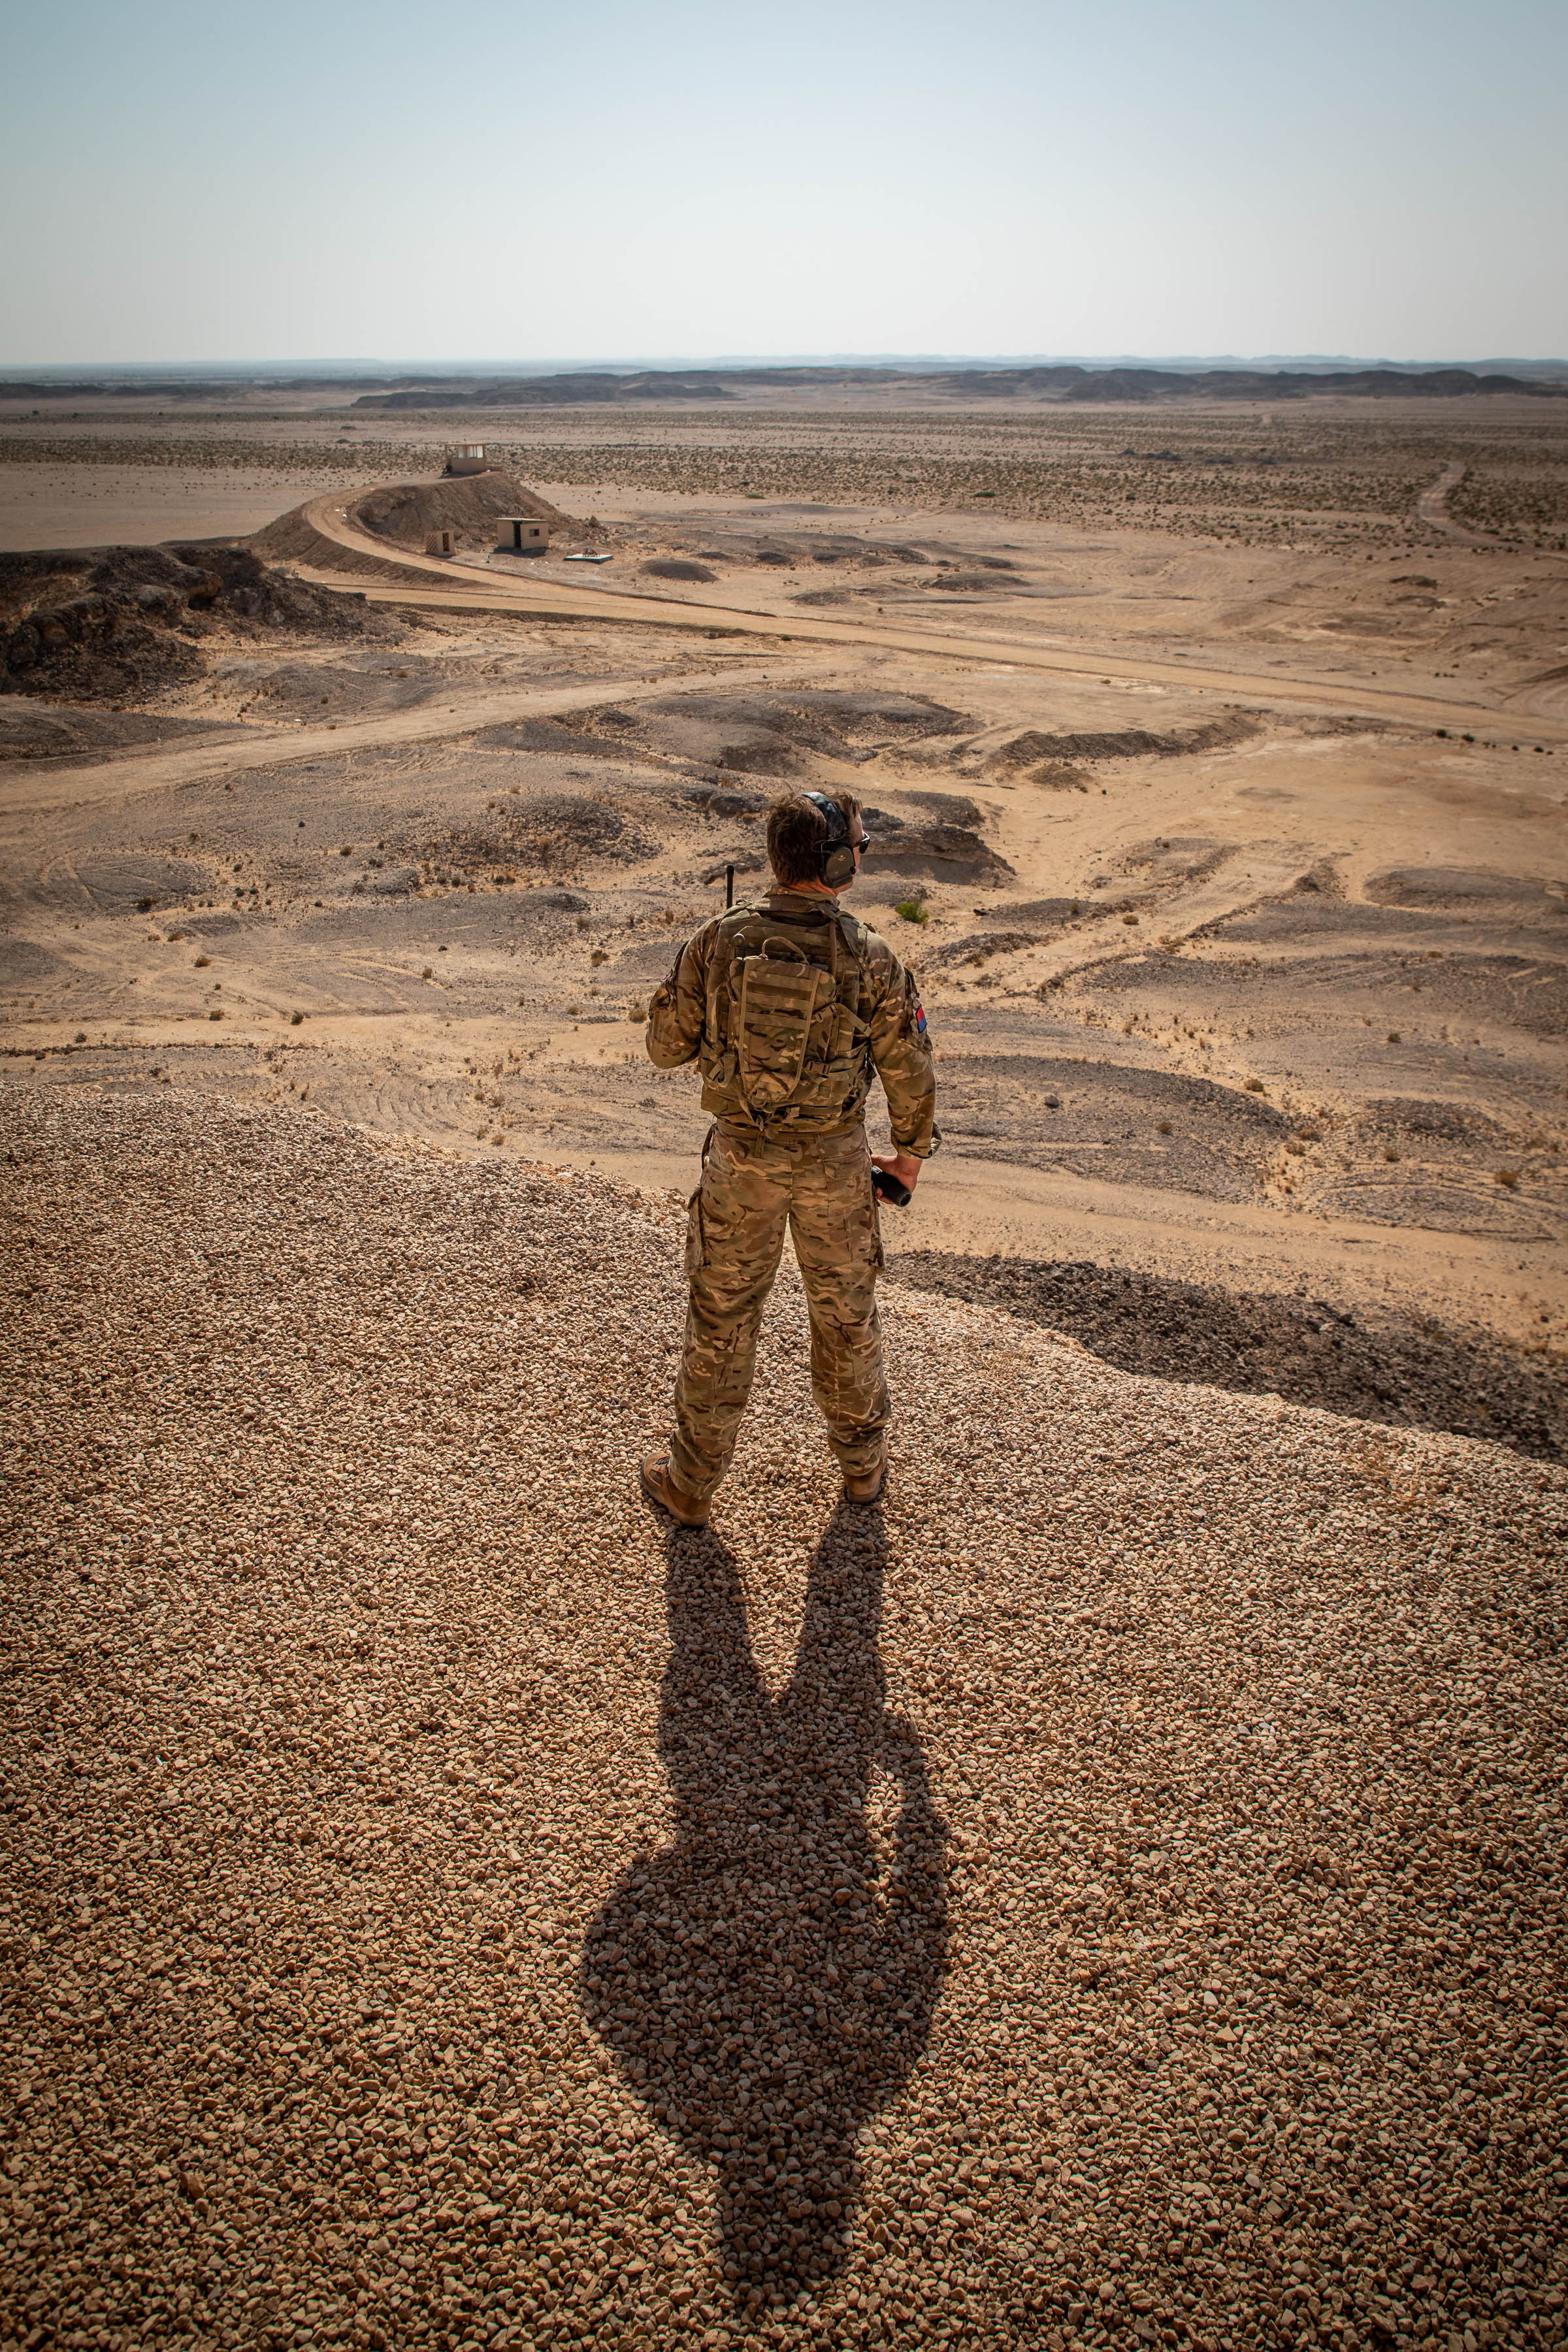 RAF Regiment looks across Omani desert.